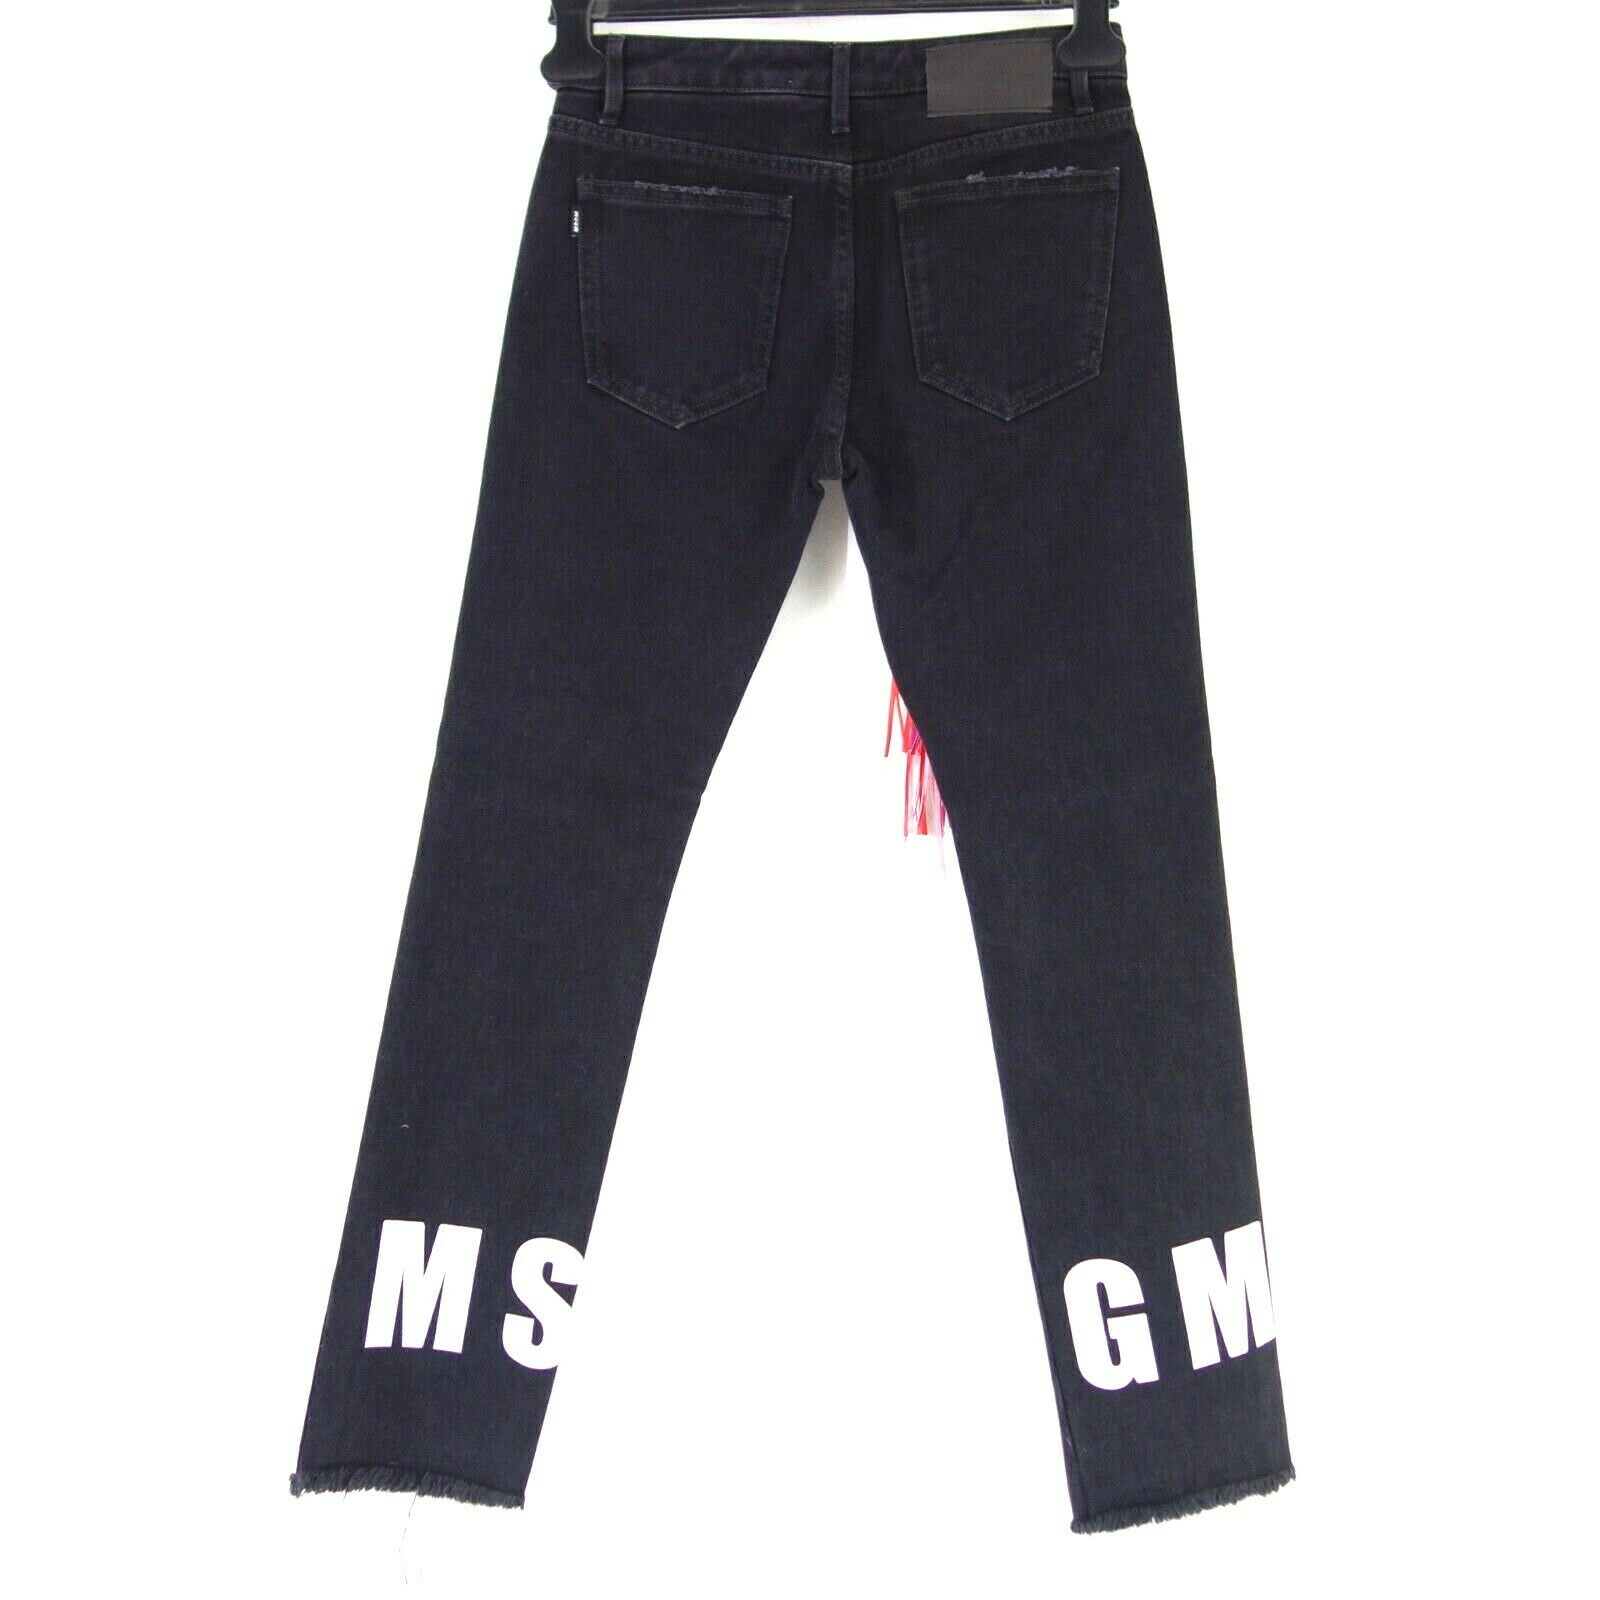 MSGM Damen Jeans Hose DE 32 Schwarz Baumwolle Straight Denim Cropped Np 229 Neu - 32